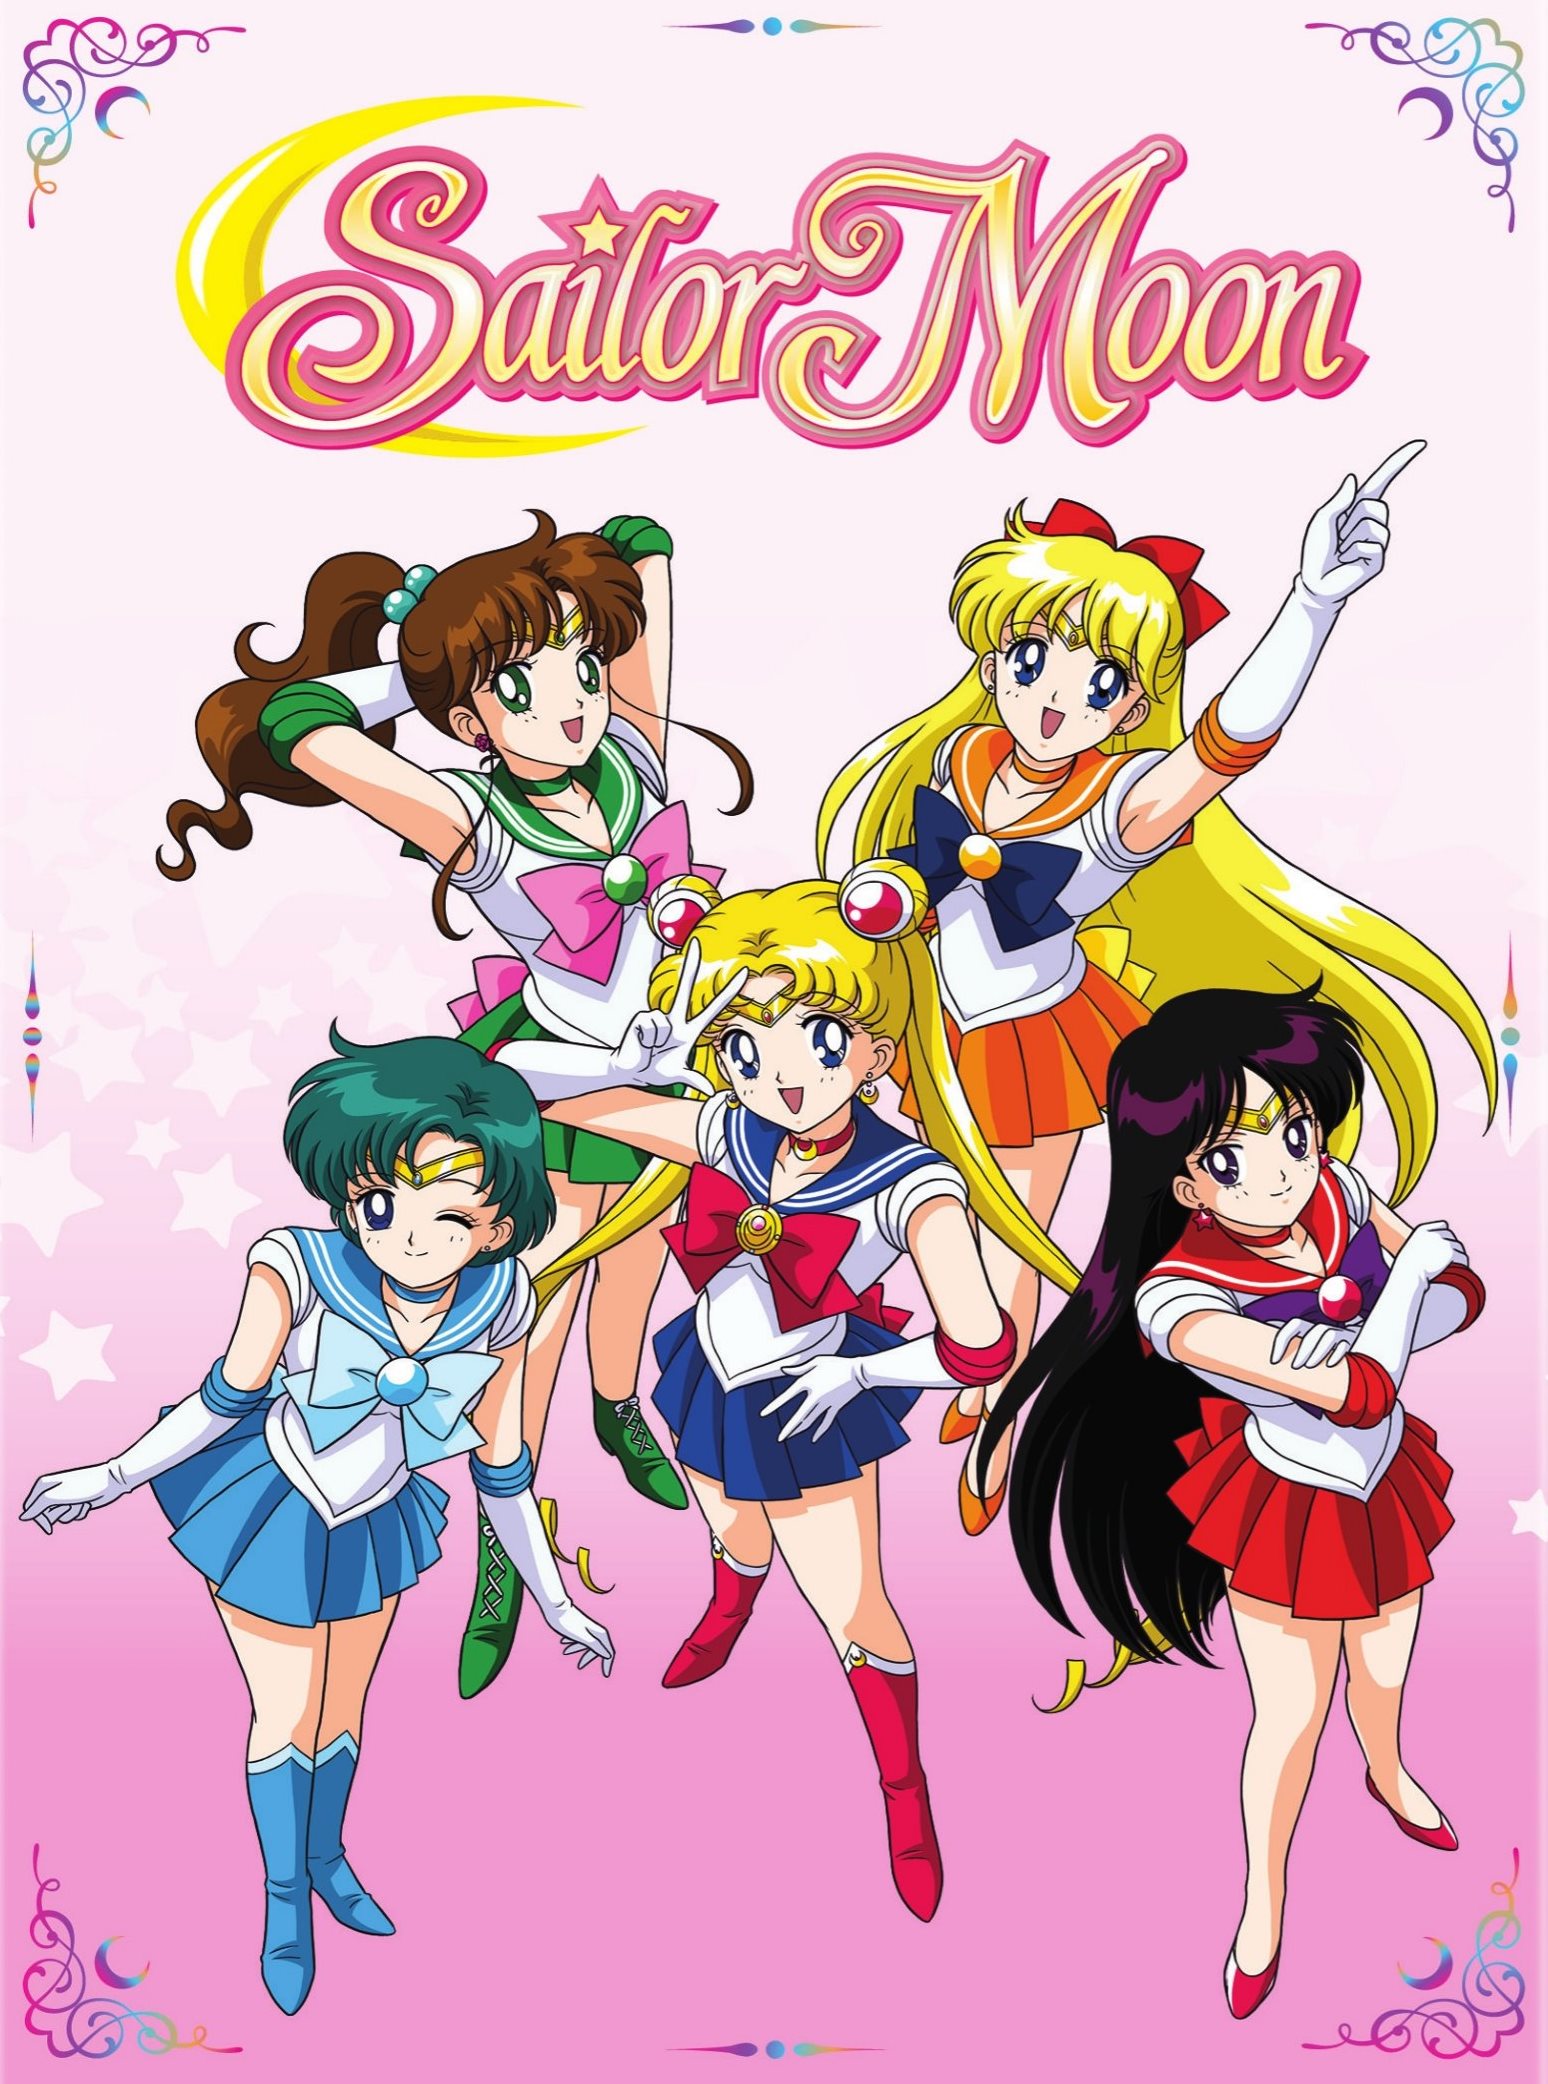 Sailor Moon S: Season 3 Part 2 [Blu-ray] [6 Discs] - Best Buy